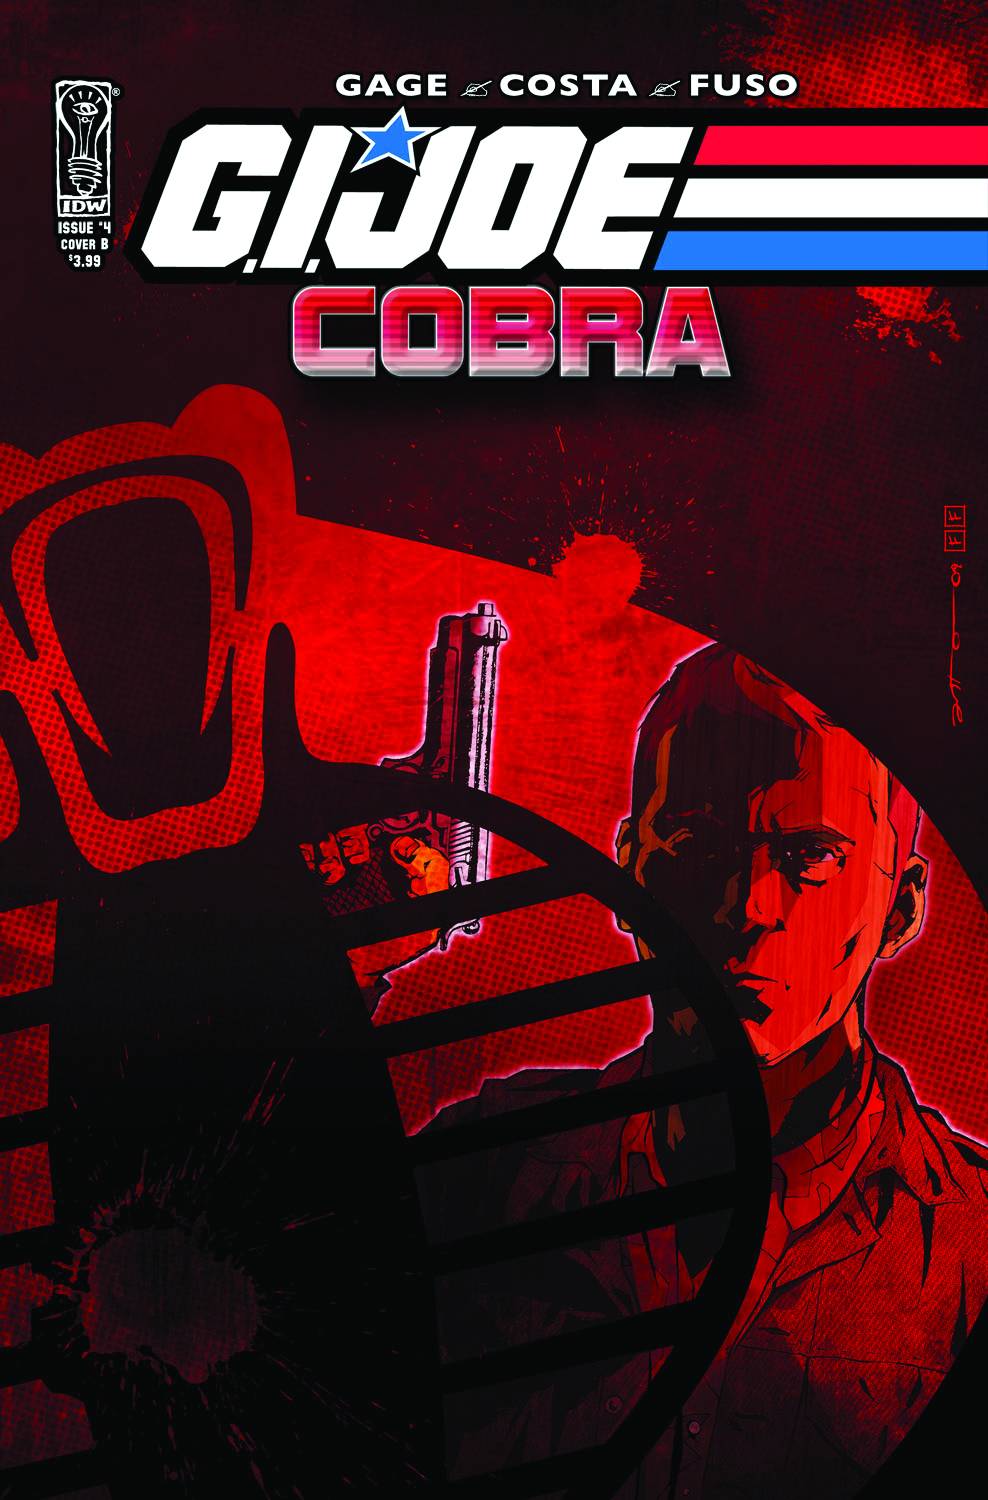 GI Joe Cobra Graphic Novel